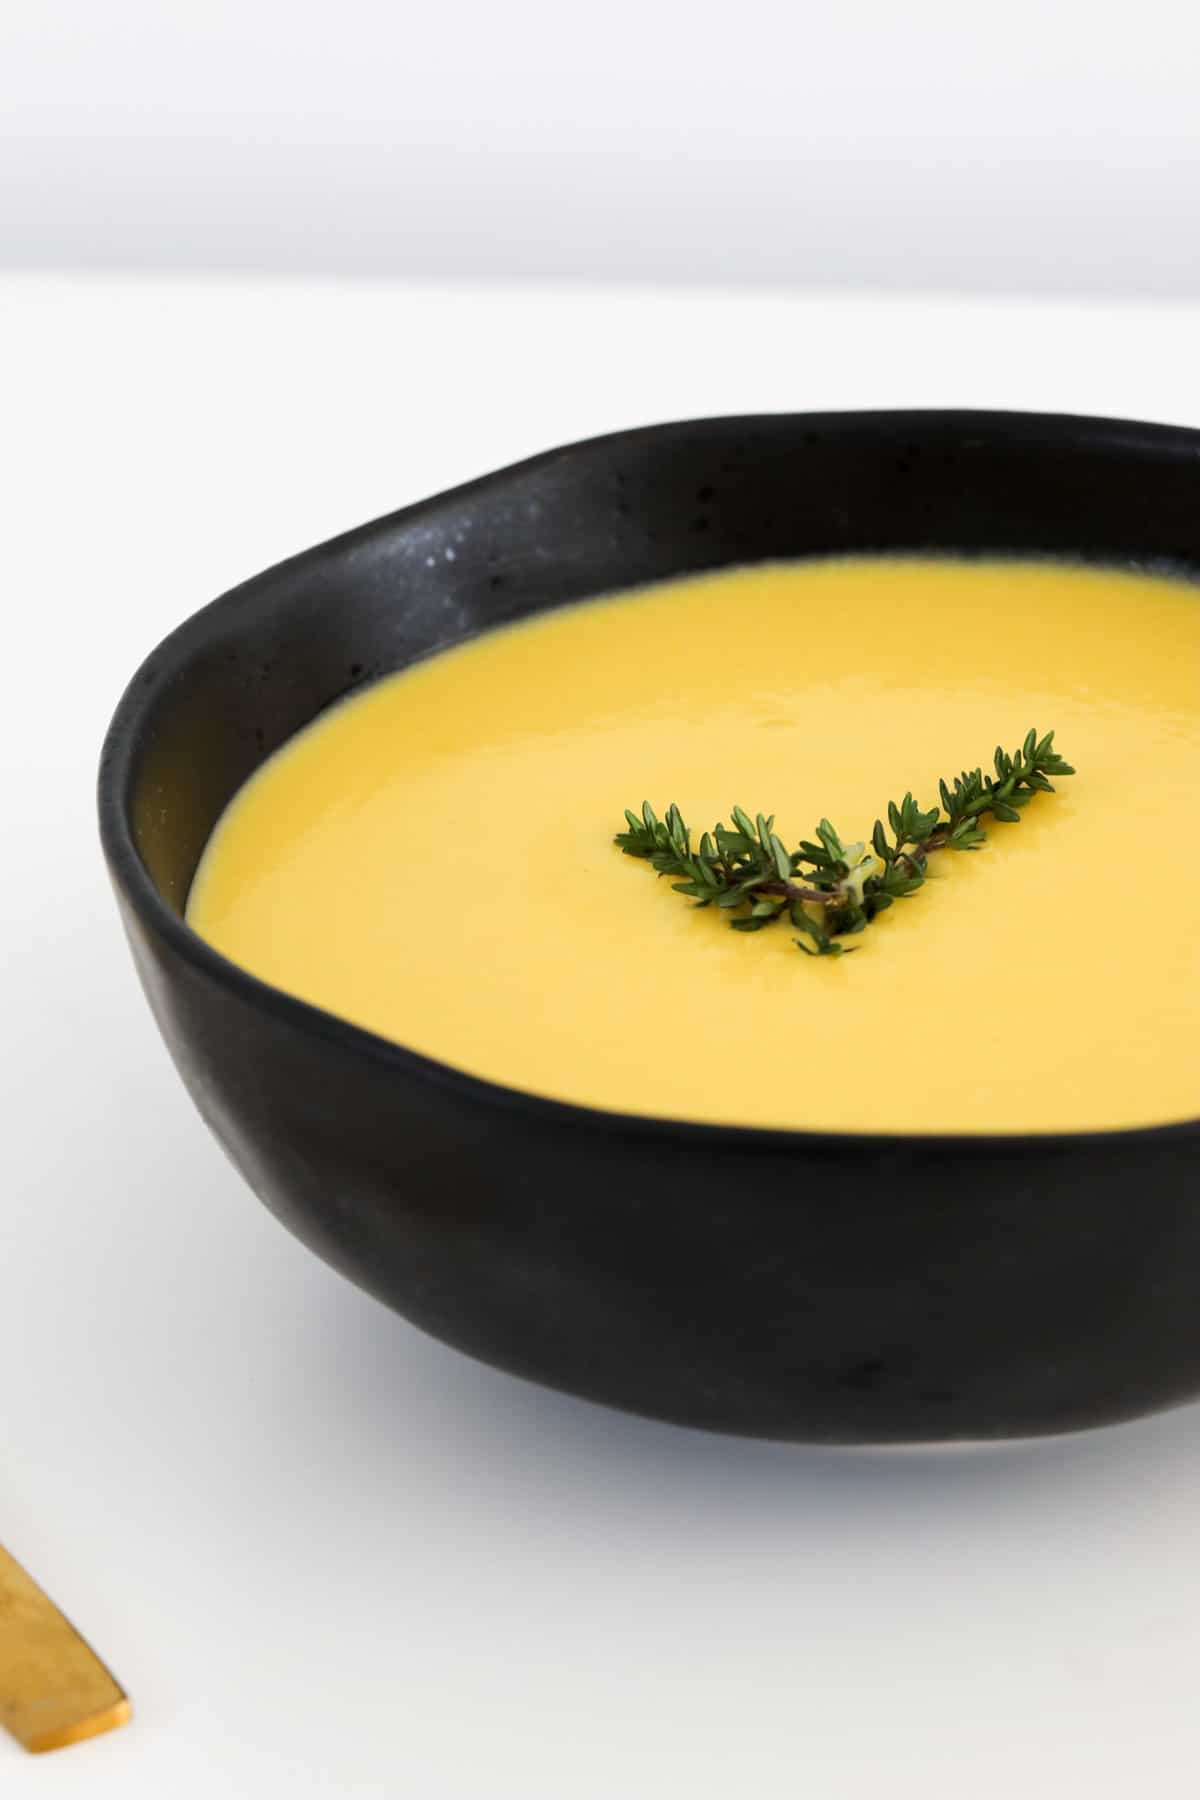 A creamy yellow soup in a black bowl.